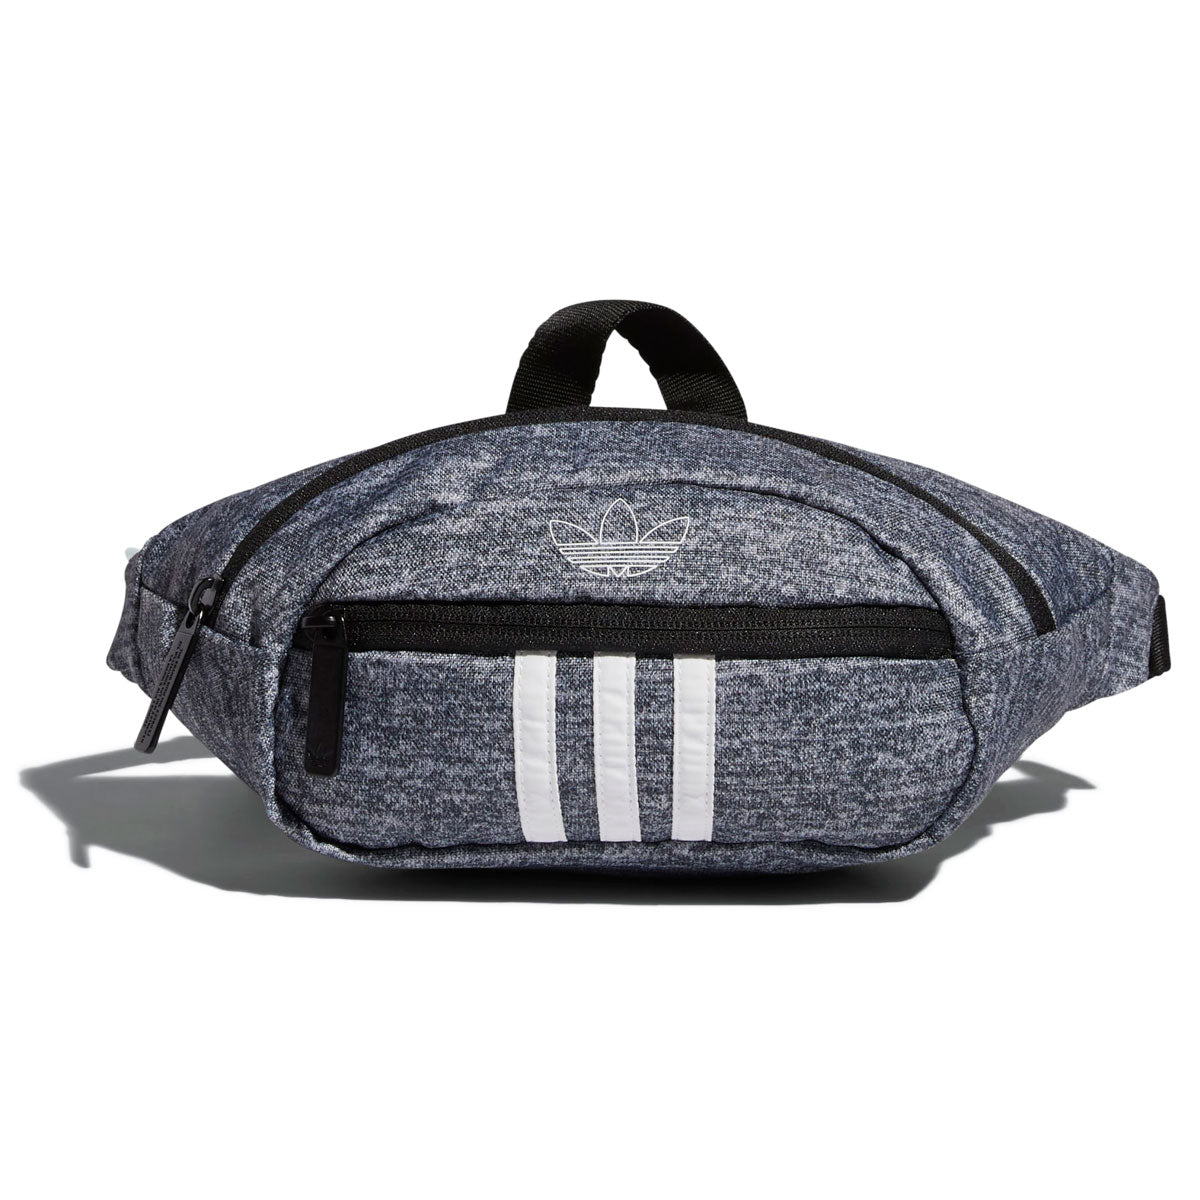 Adidas Originals National 3-Stripes Waist Pack
 Bag - Onix Jersey/White image 1